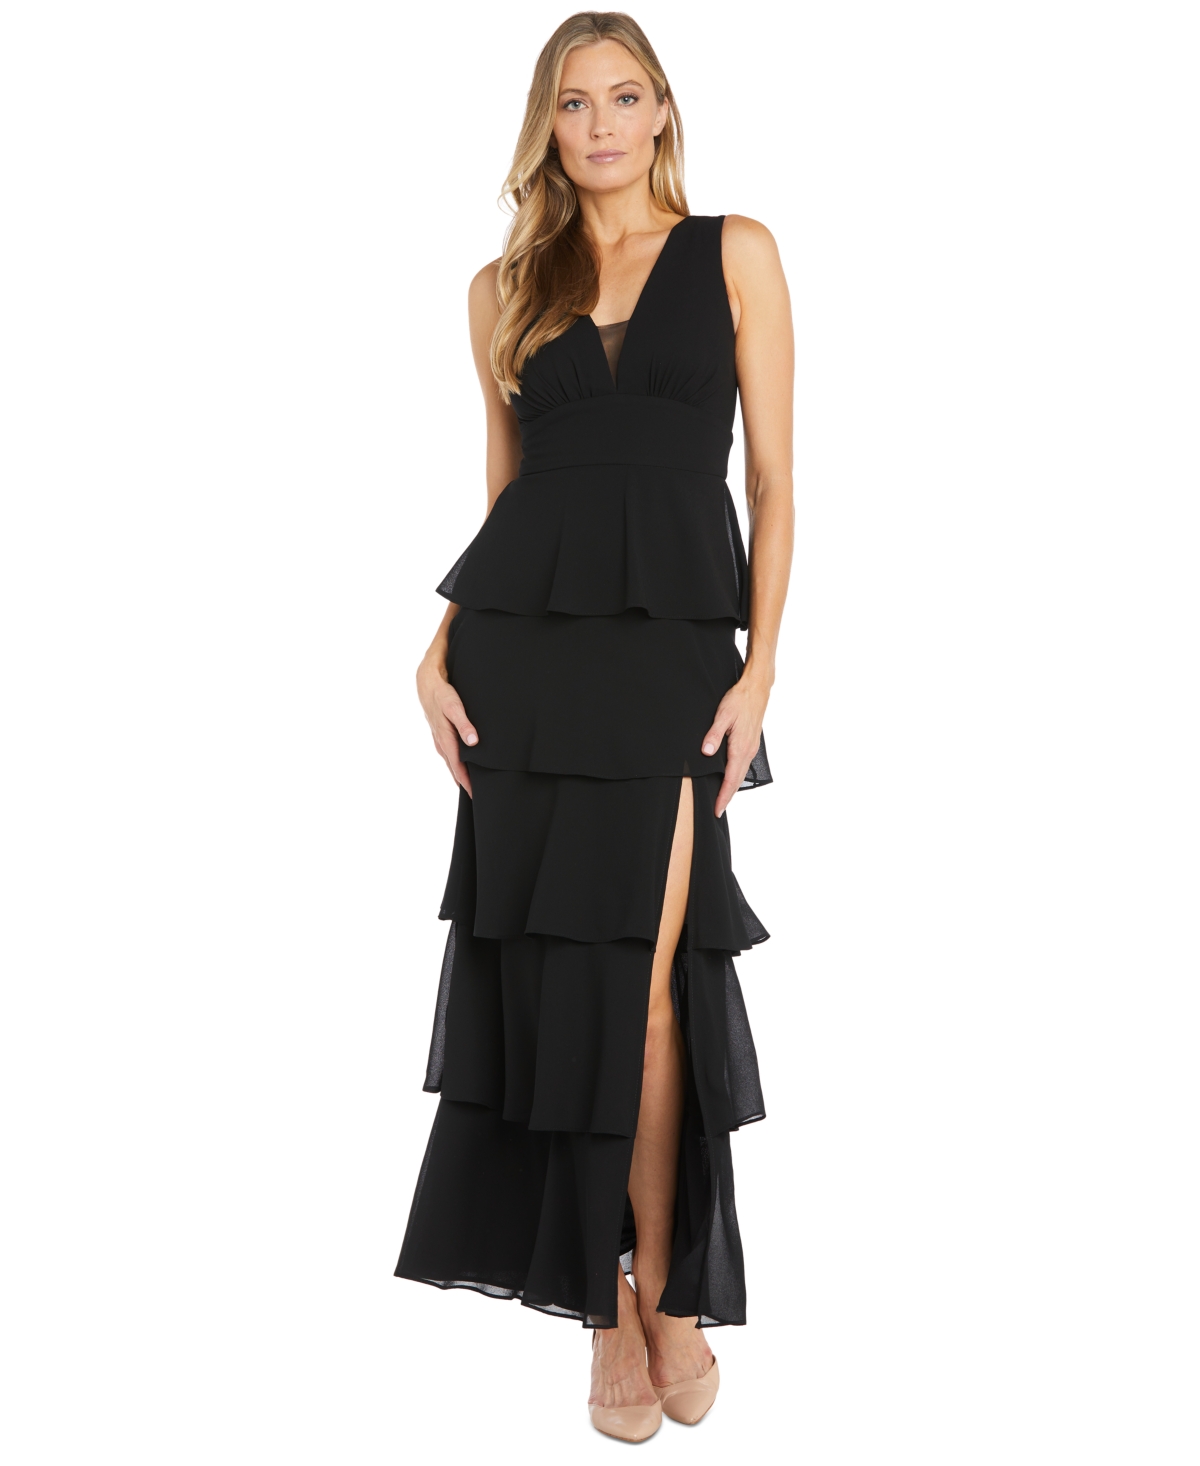 Women's Multi-Tiered Side-Slit Gown - Black